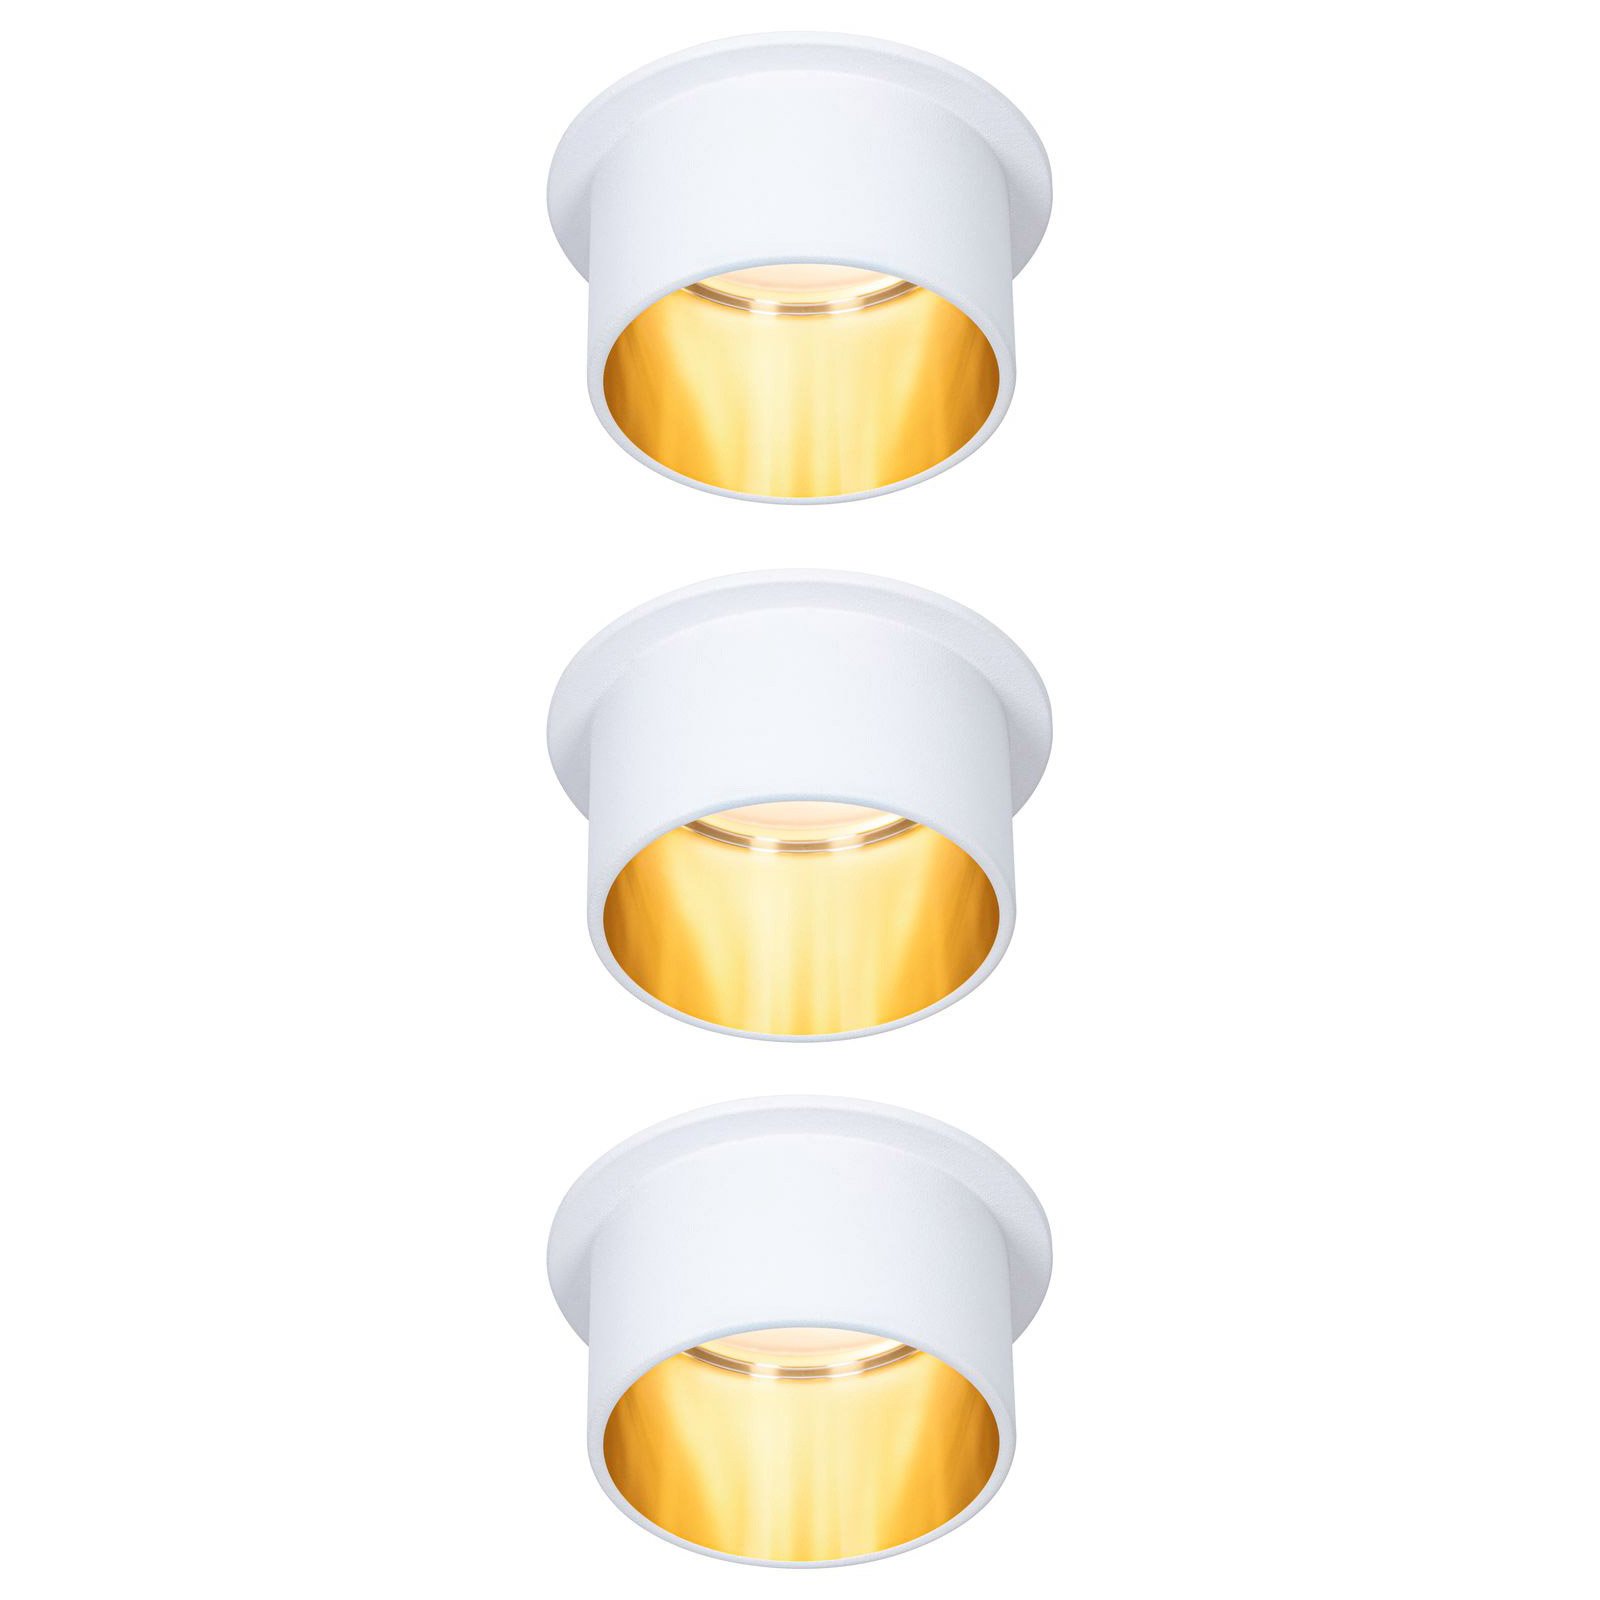 Paulmann Gil -LED-uppovalo, valkoinen/kulta, 3 kpl